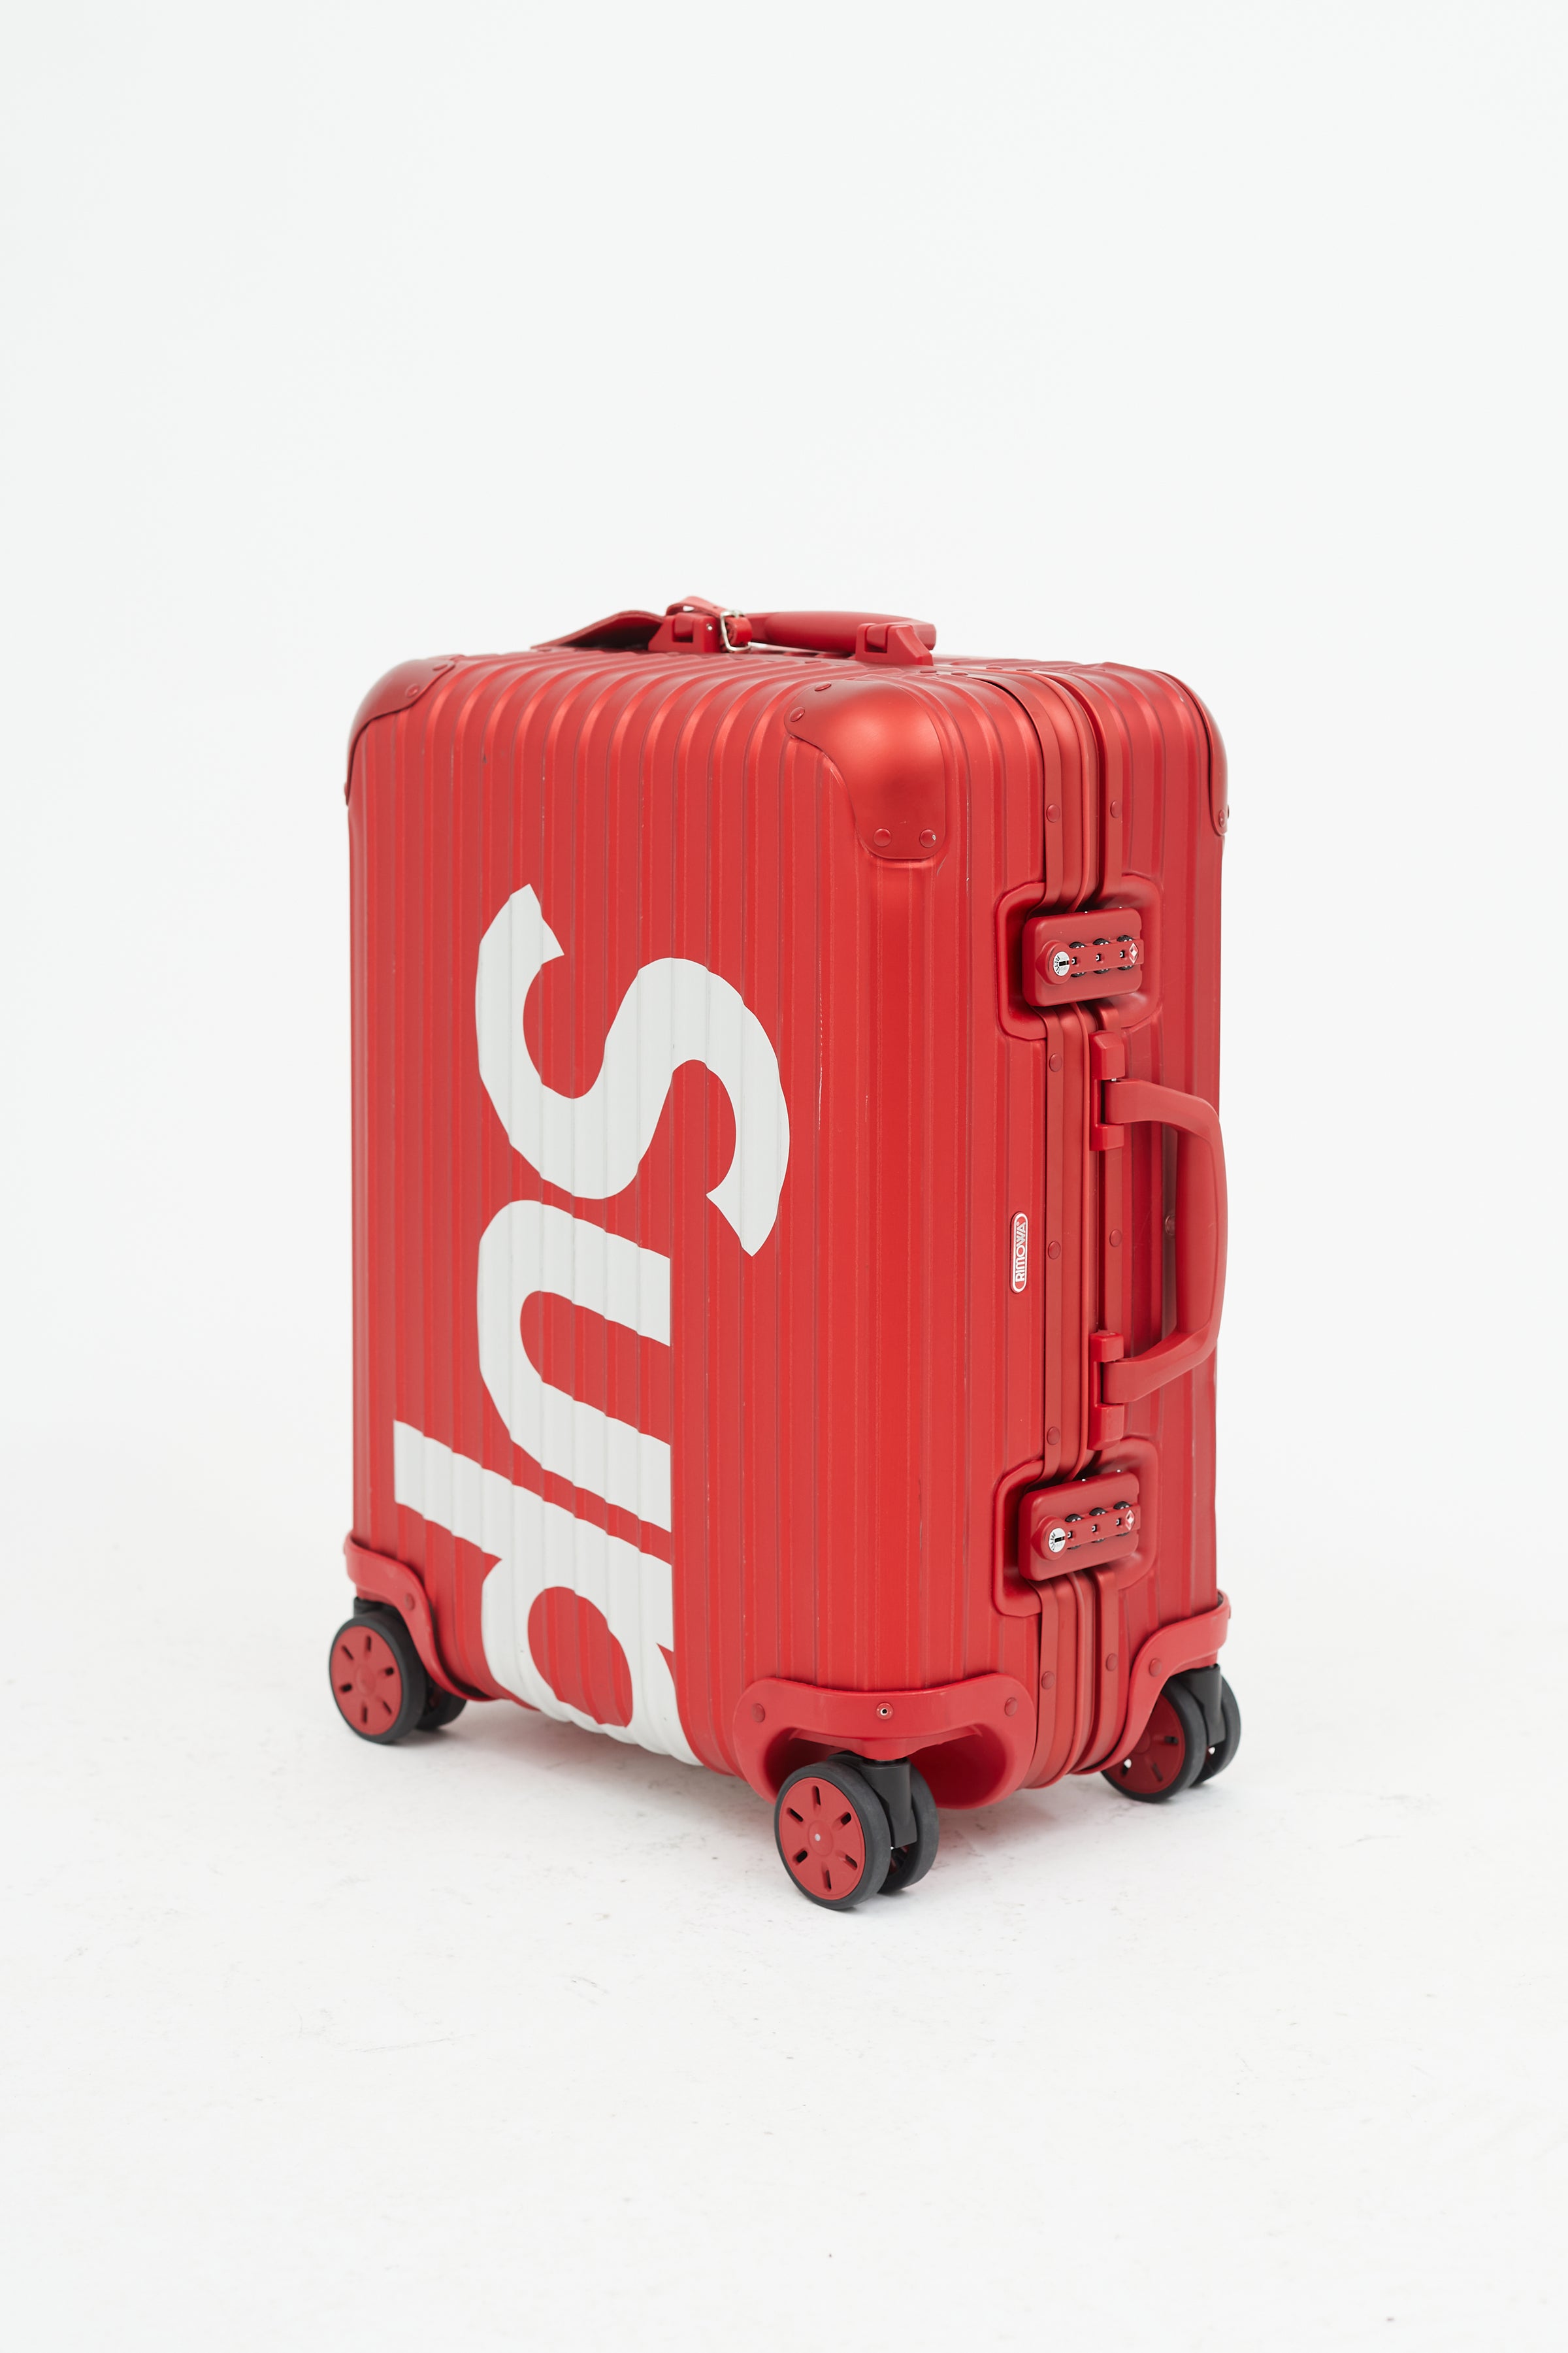 Supreme Trolley Luggage Hard Case